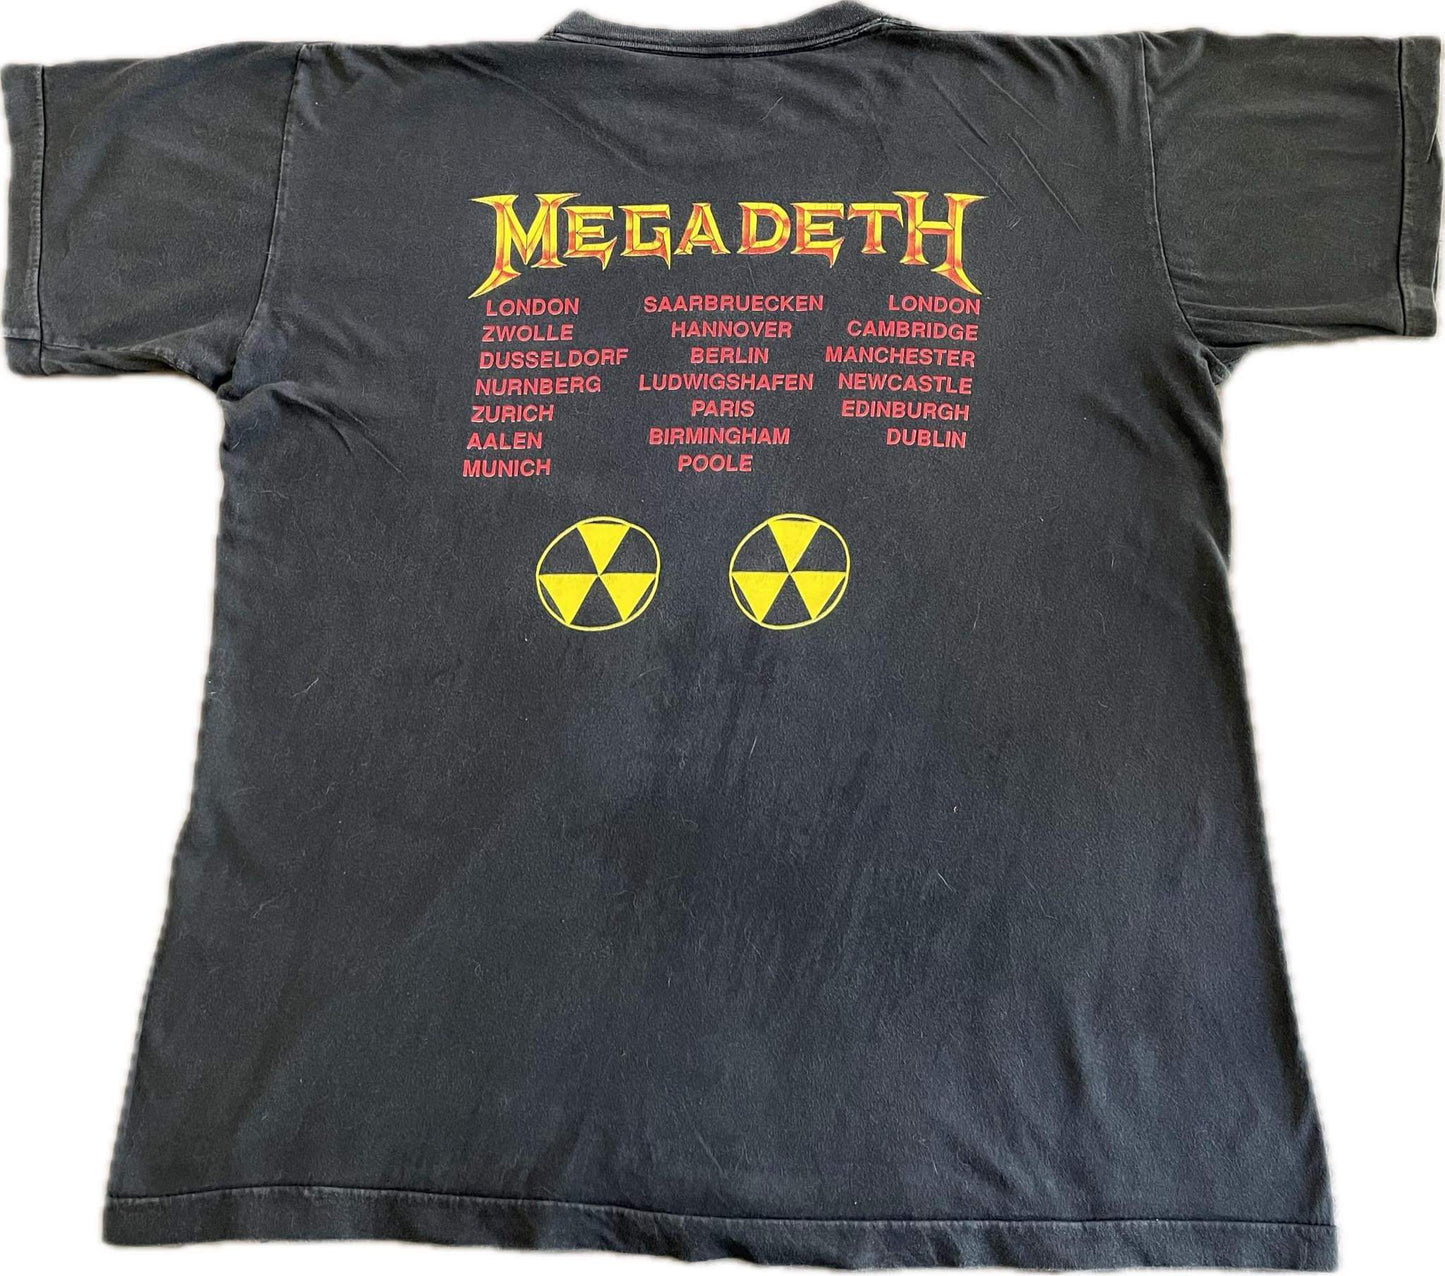 Megadeth - Rust In Peace - European Tour 1991 - Original Vintage t-shirt